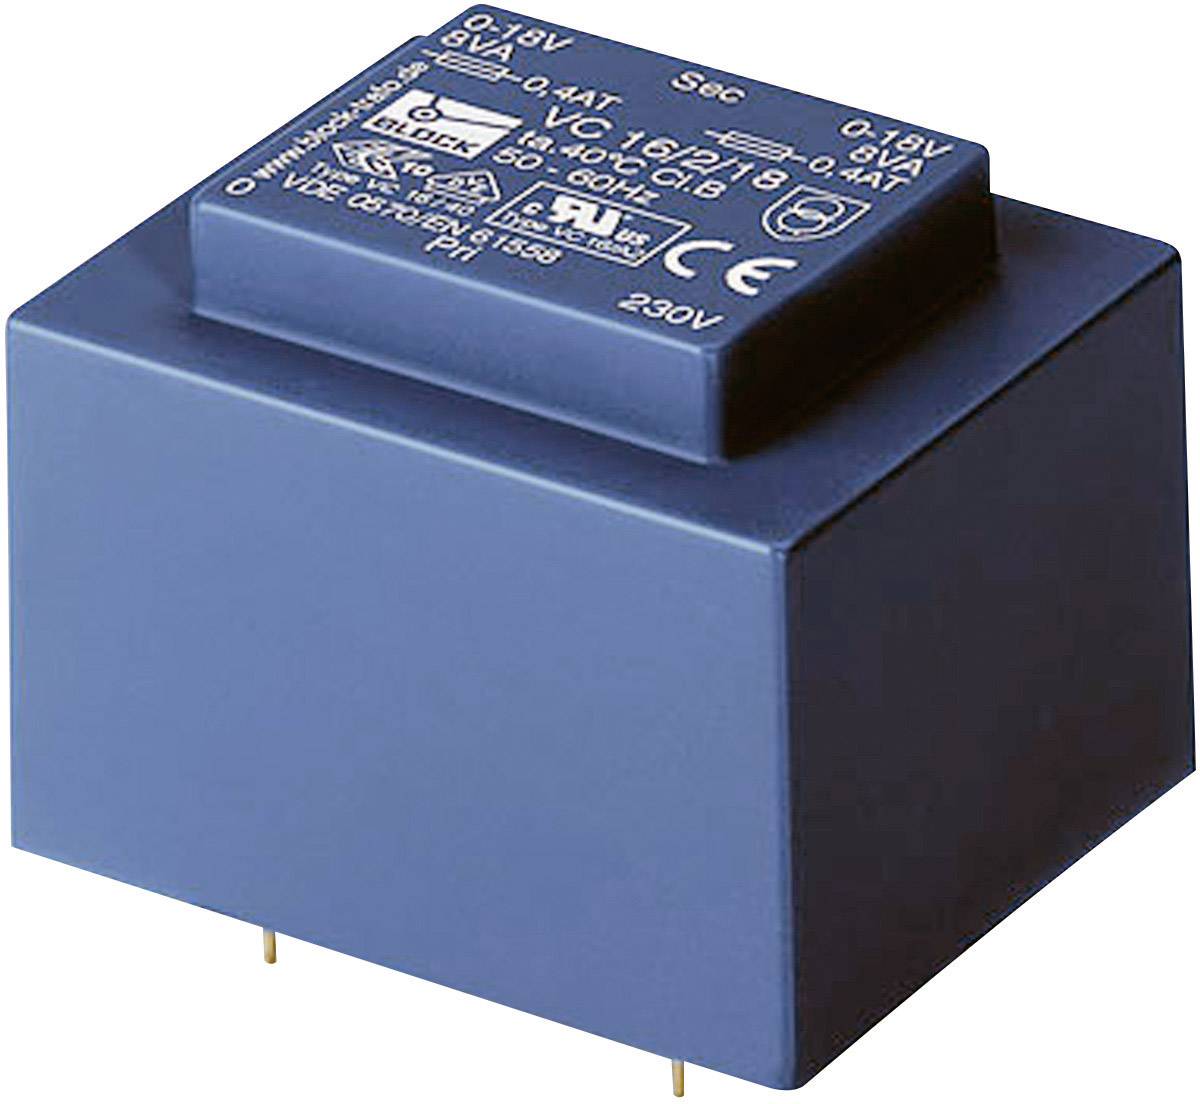 30 VA low profile PCB transformer 2 x 115 V to 2 x 15 V Block FL 30/15 